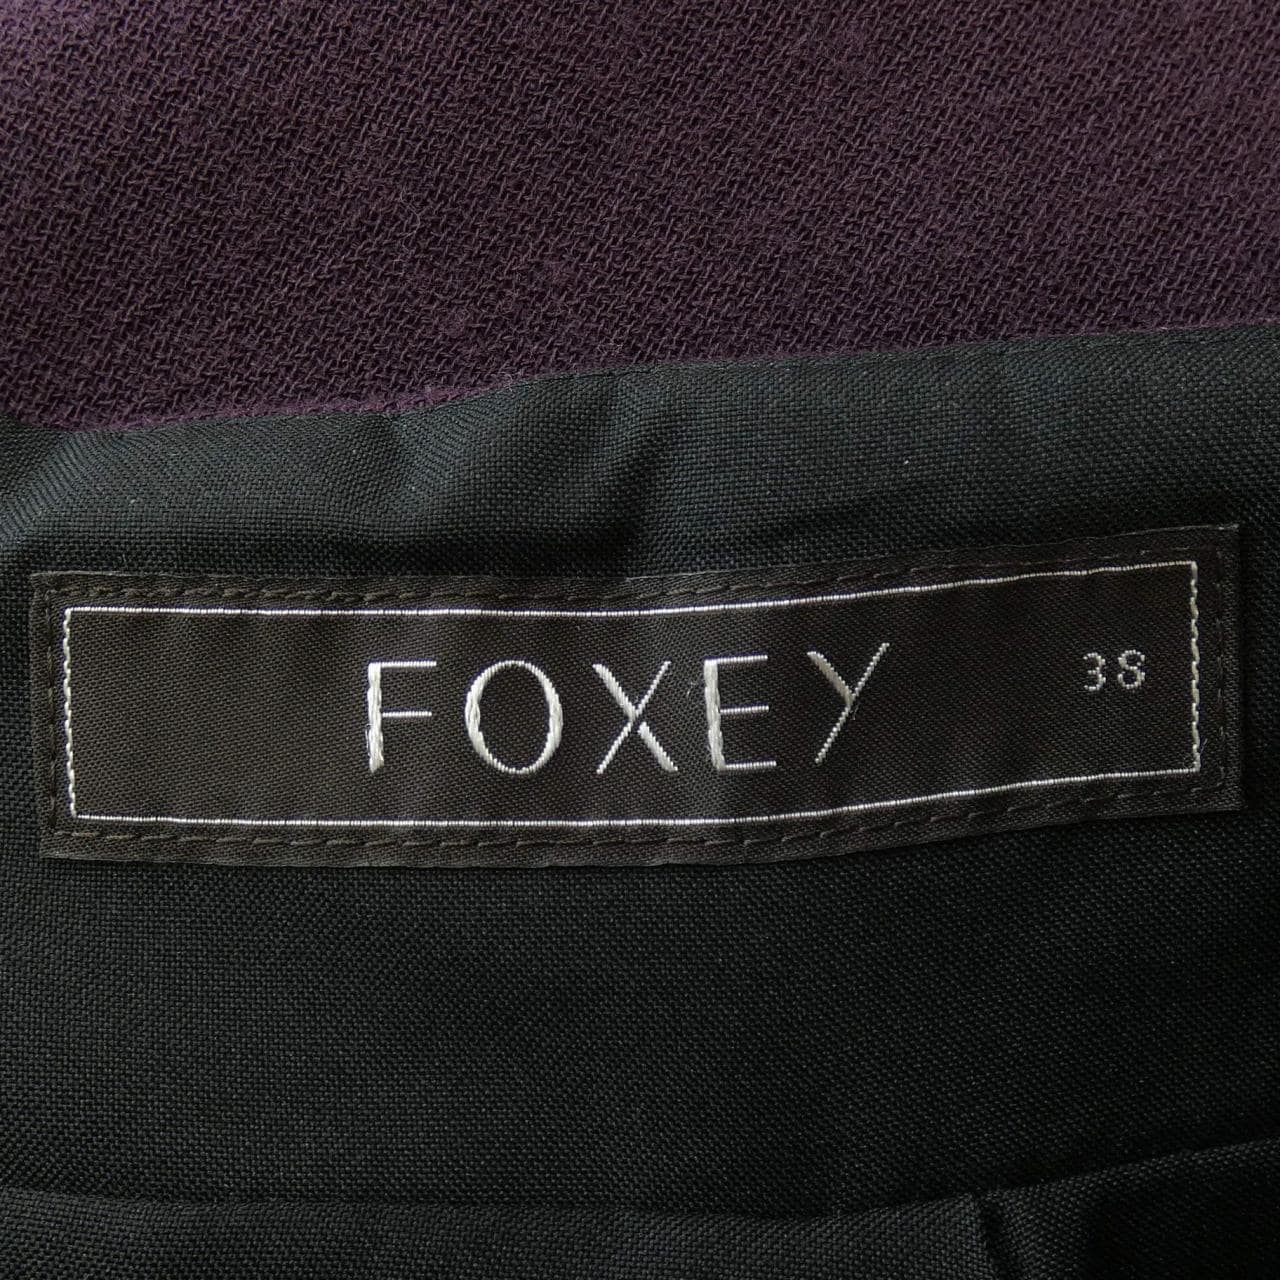 Foxy Boutique FOXEY BOUTIQUE裙子